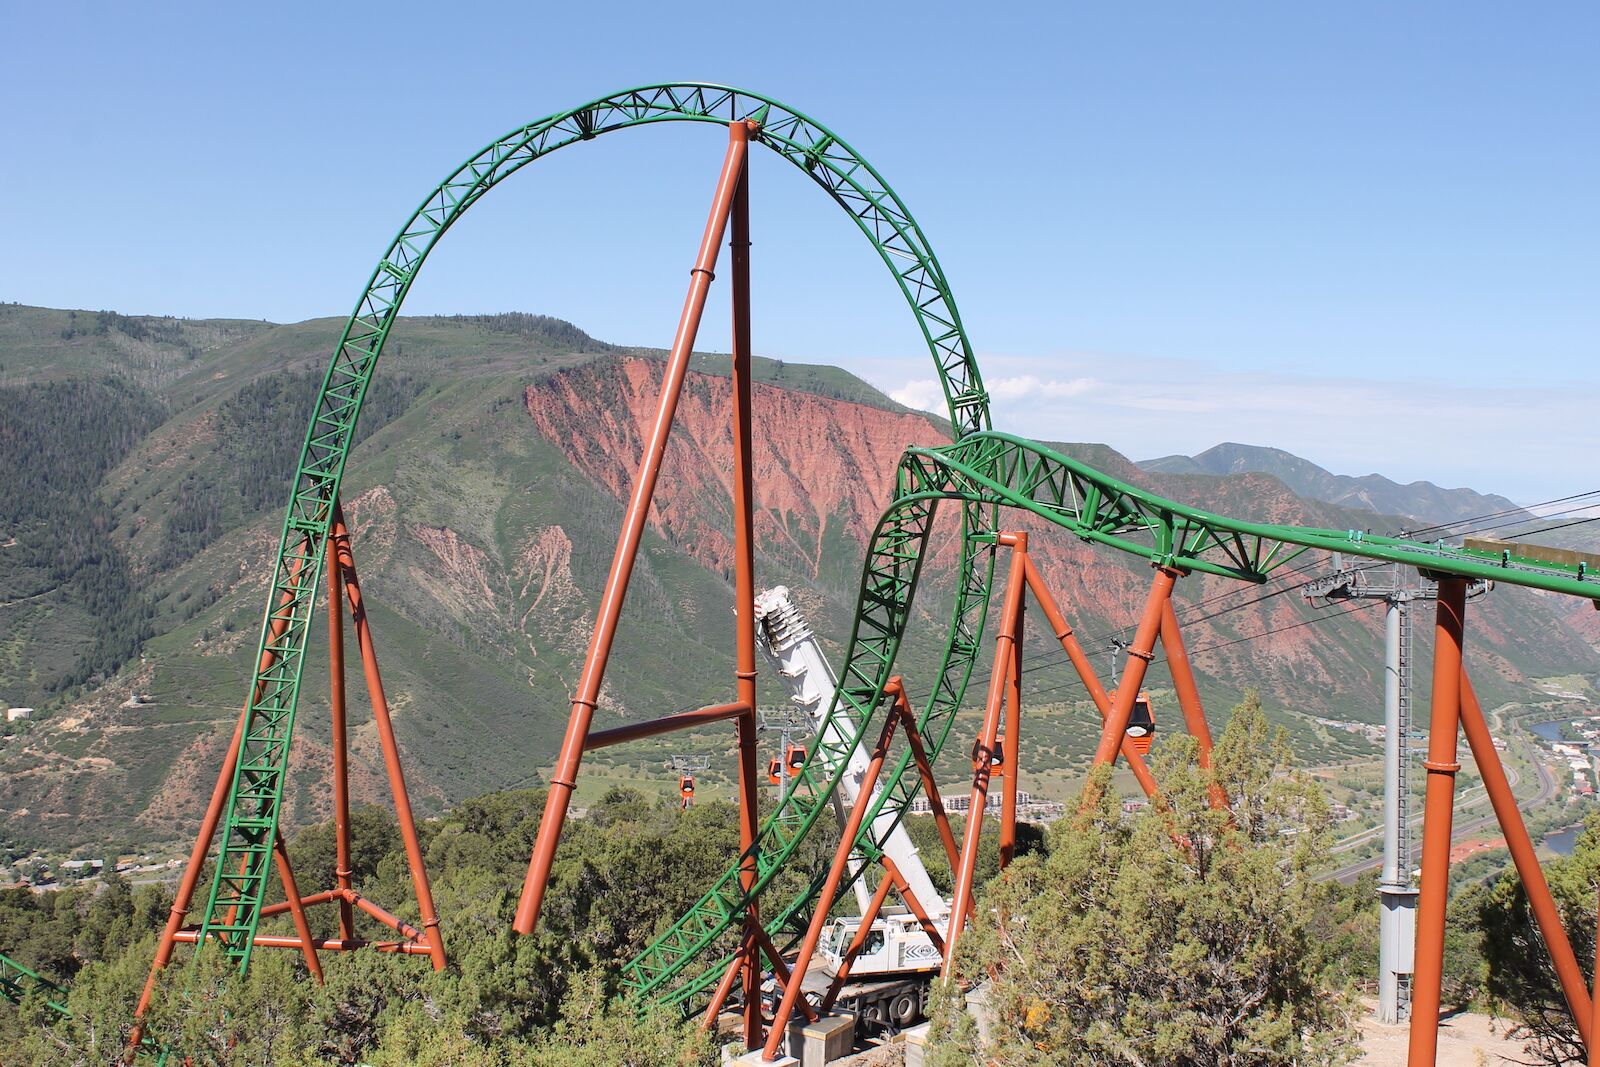 defiance rollercoaster in glenwood springs colorado at glenwood caverns amusement park